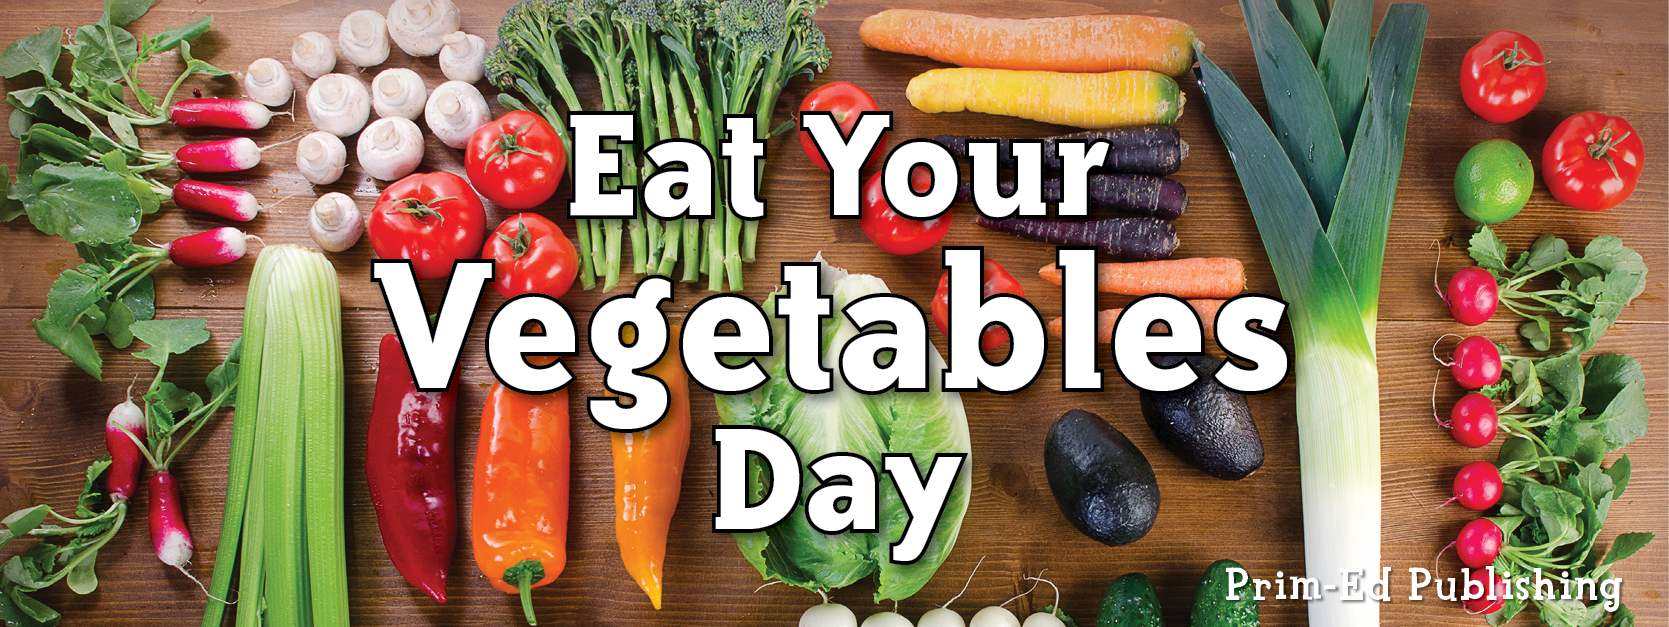 National Eat Your Veggies Day PrimEd Publishing Blog